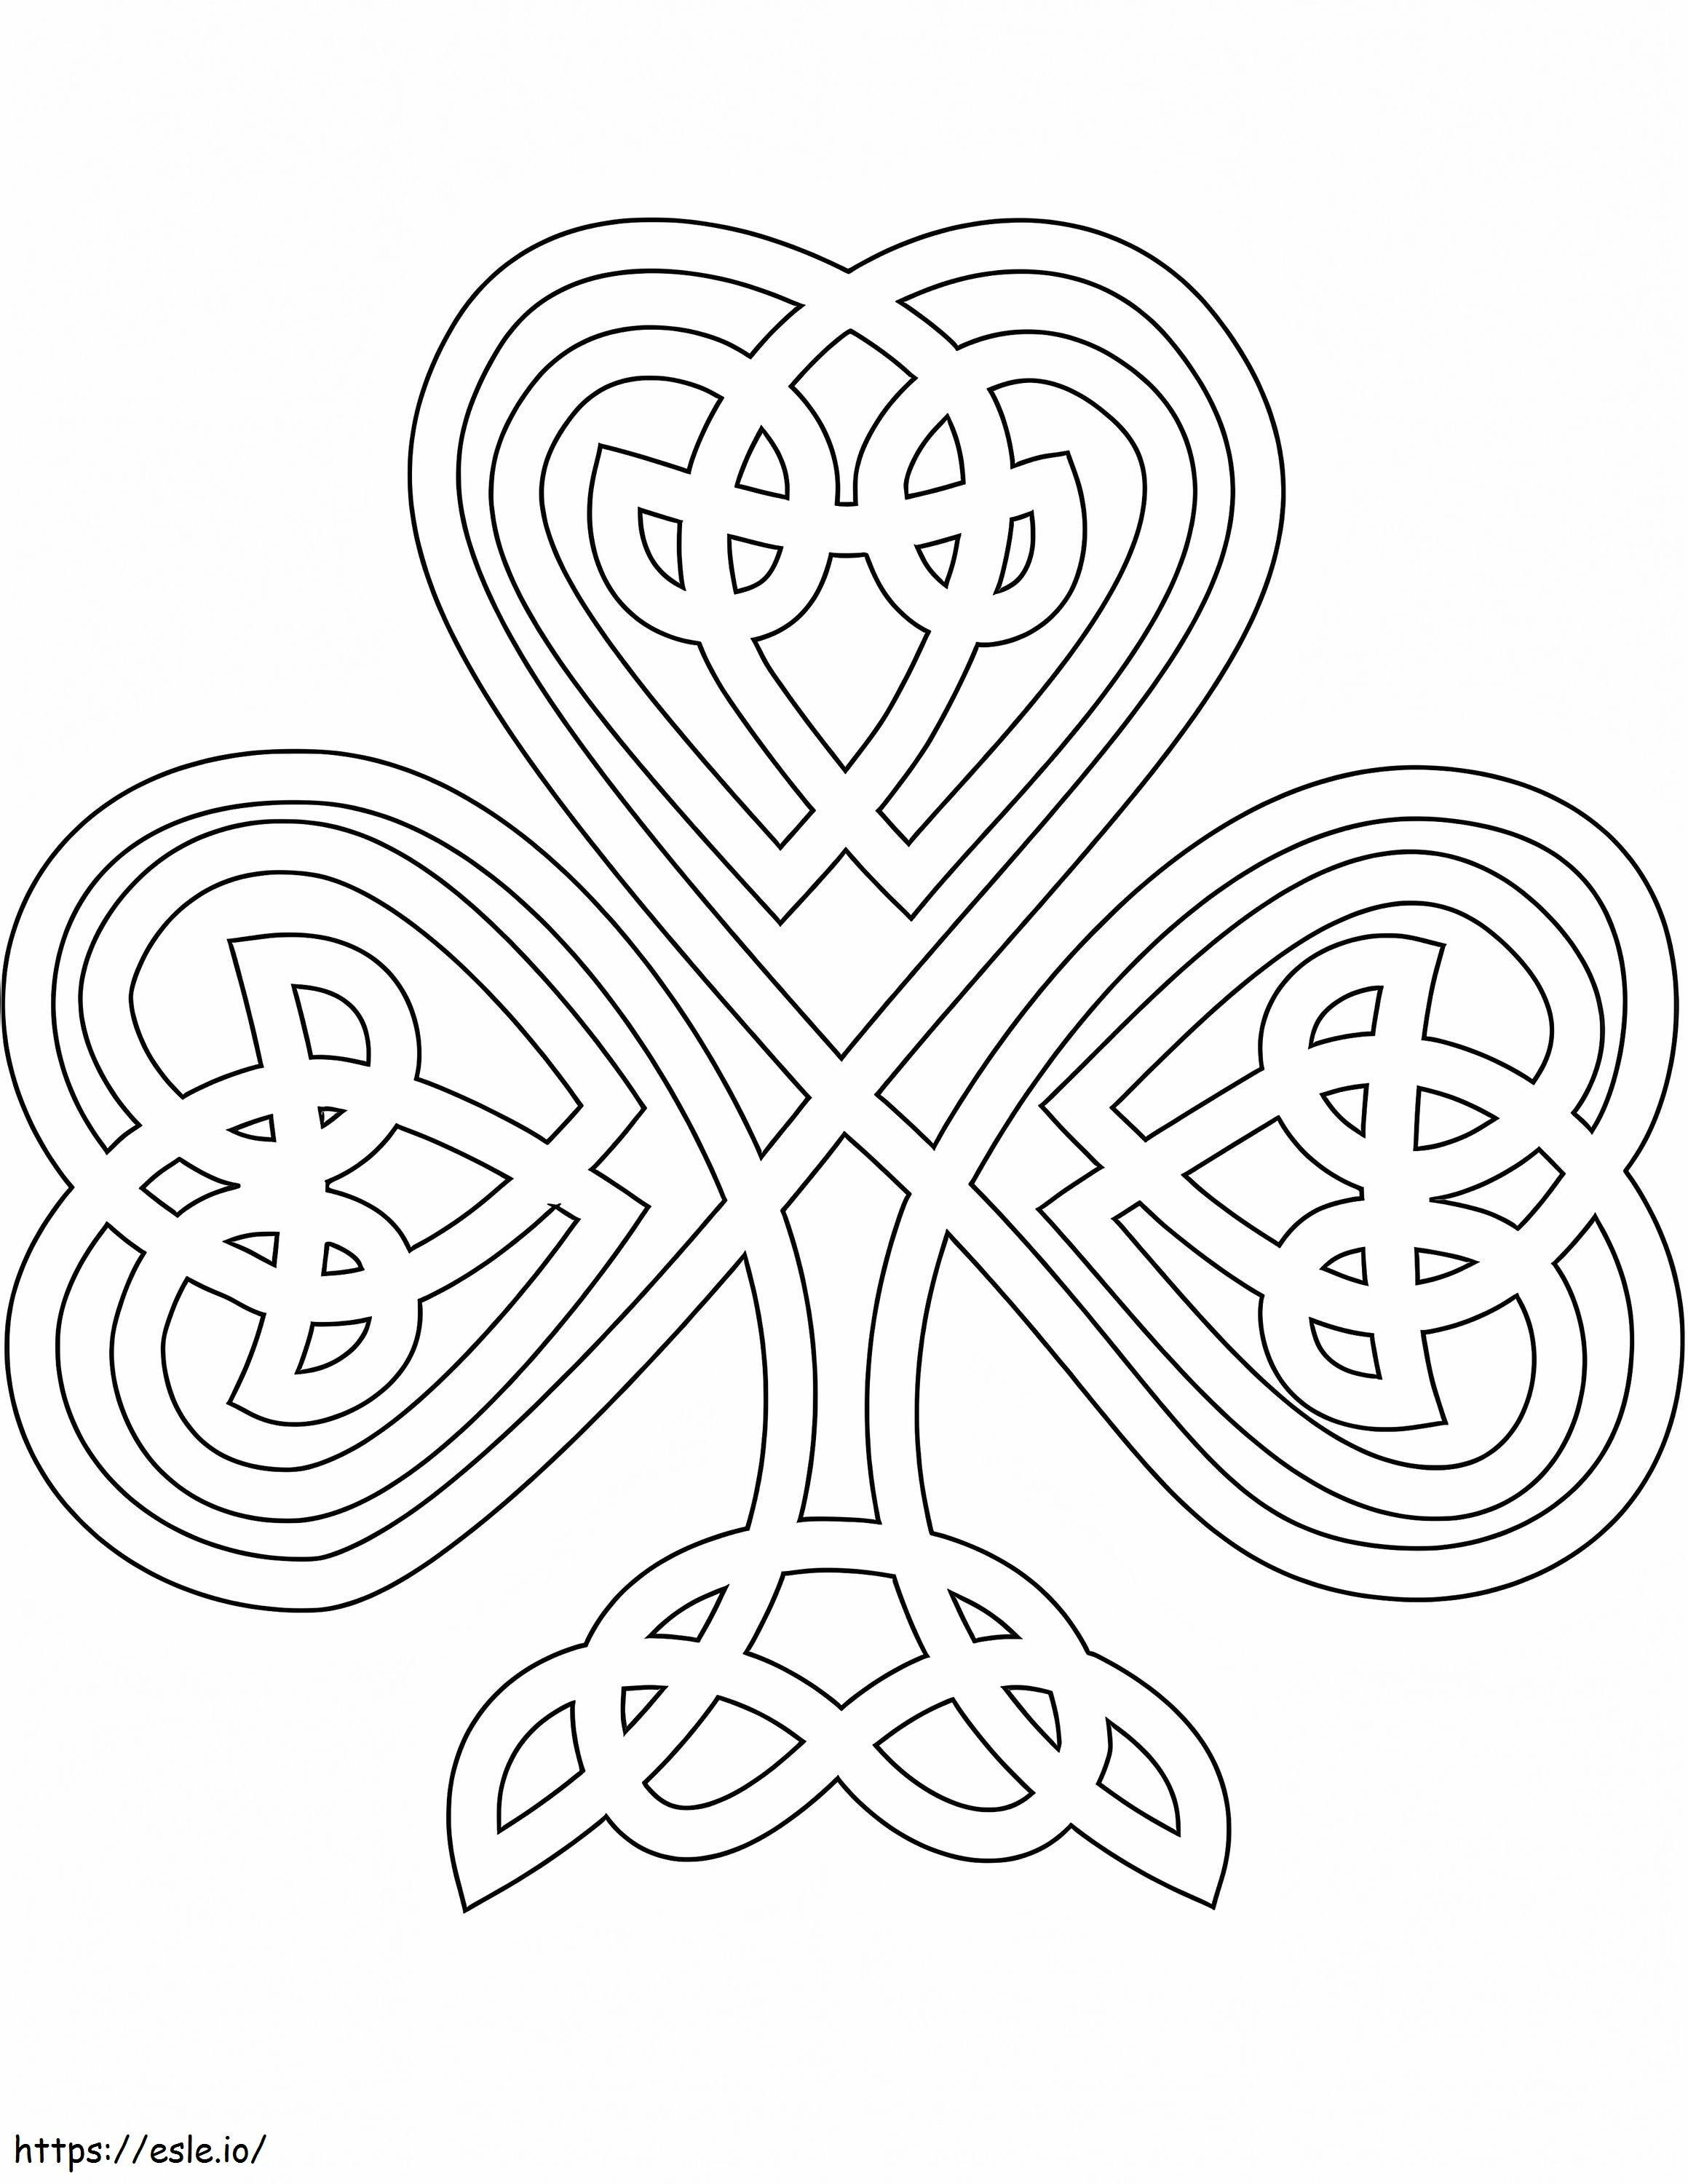 Celtic Style Shamrock coloring page